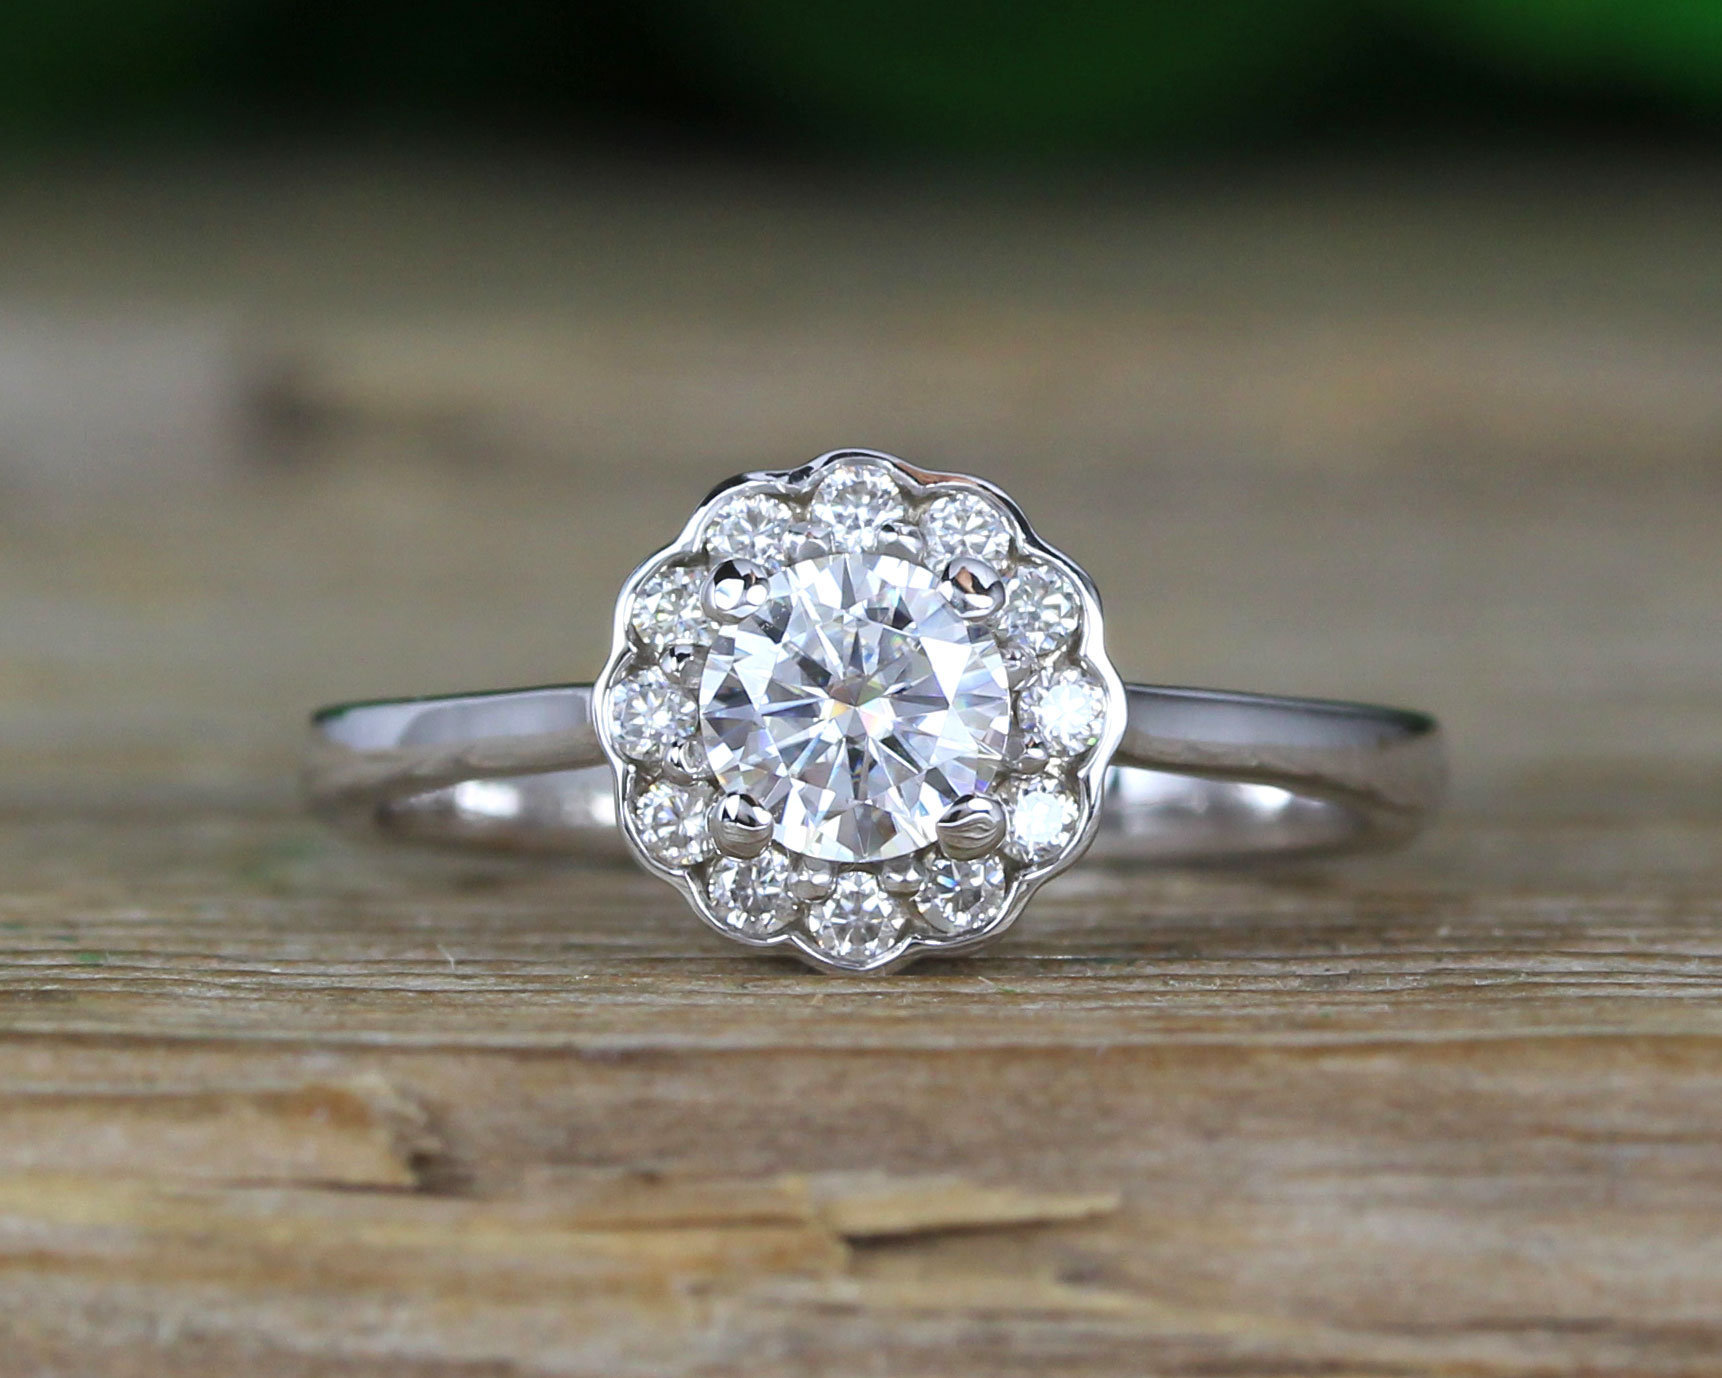 Vintage Engagement Rings | Timeless Diamond Rings in London, UK